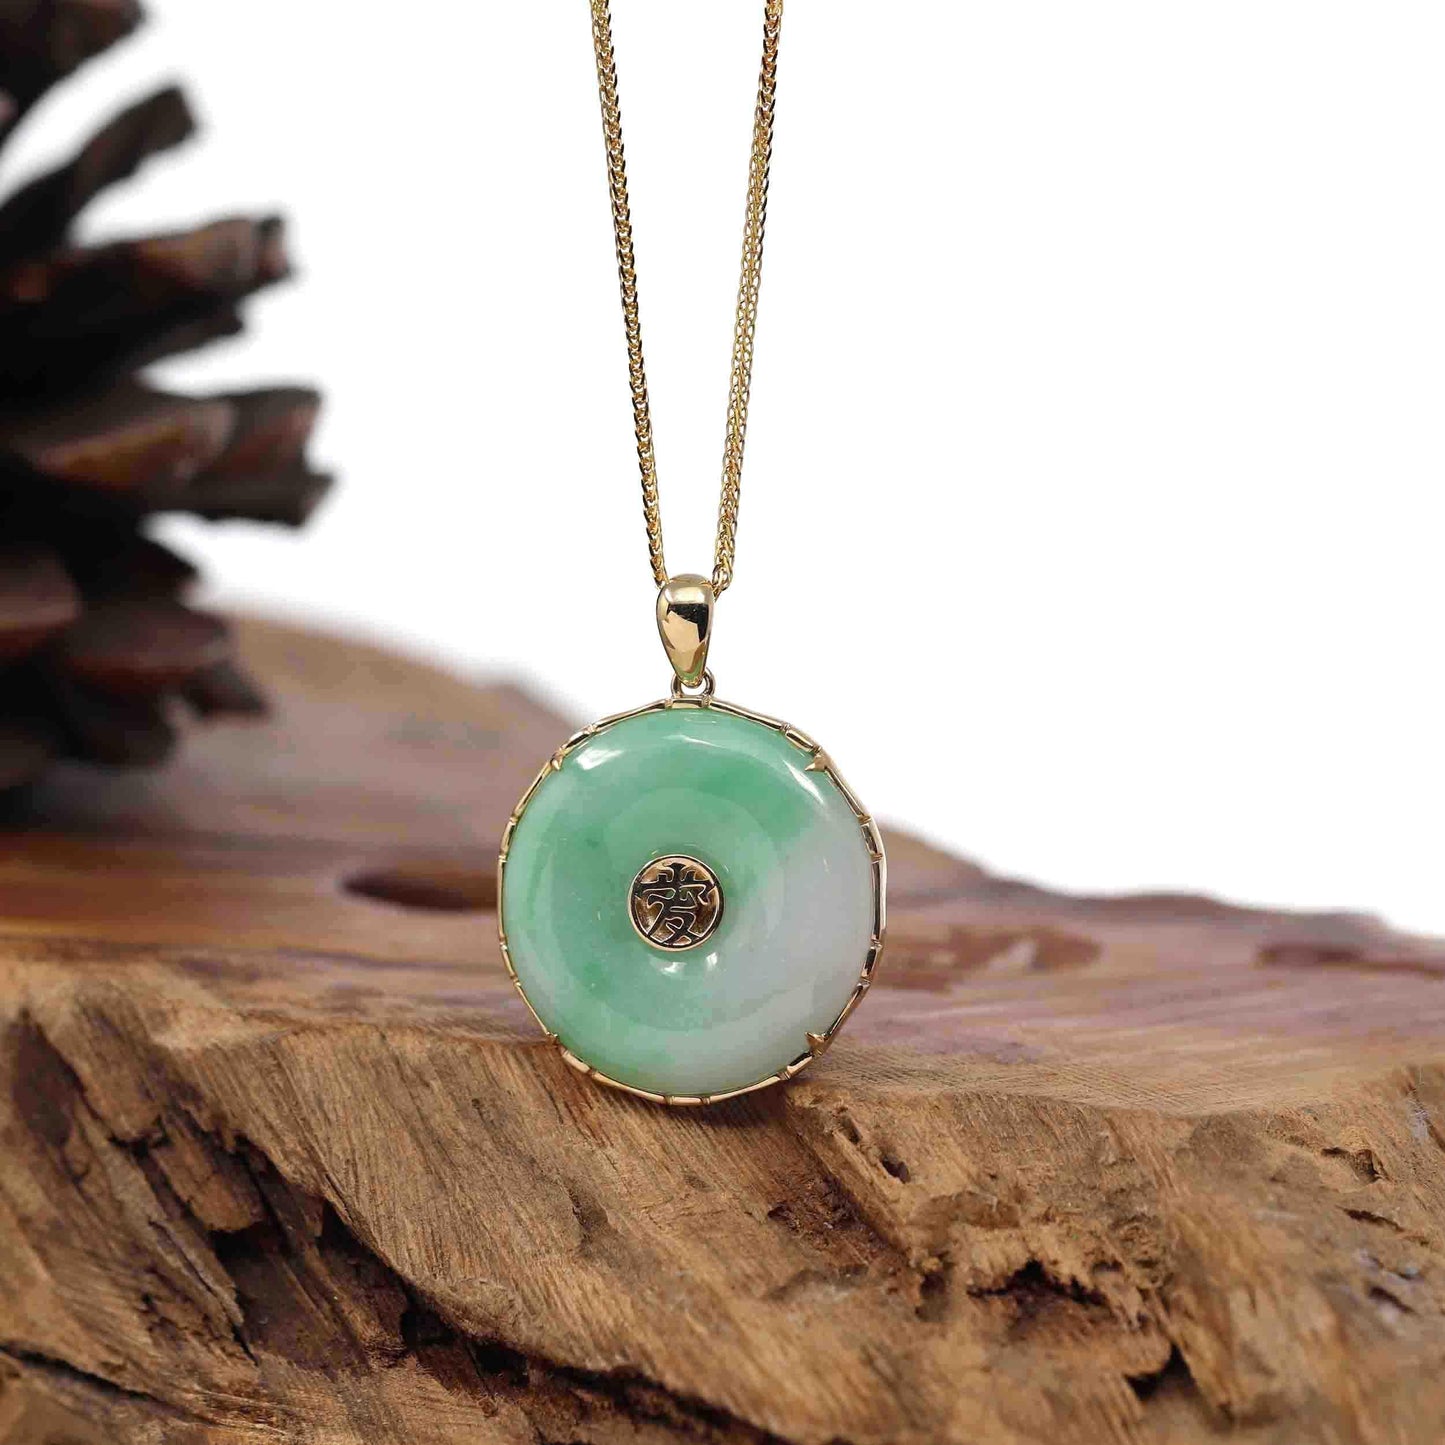 RealJade® Co. "Good Luck Button" Necklace Lavender Green Jadeite Jade Lucky KouKou Pendant Necklace